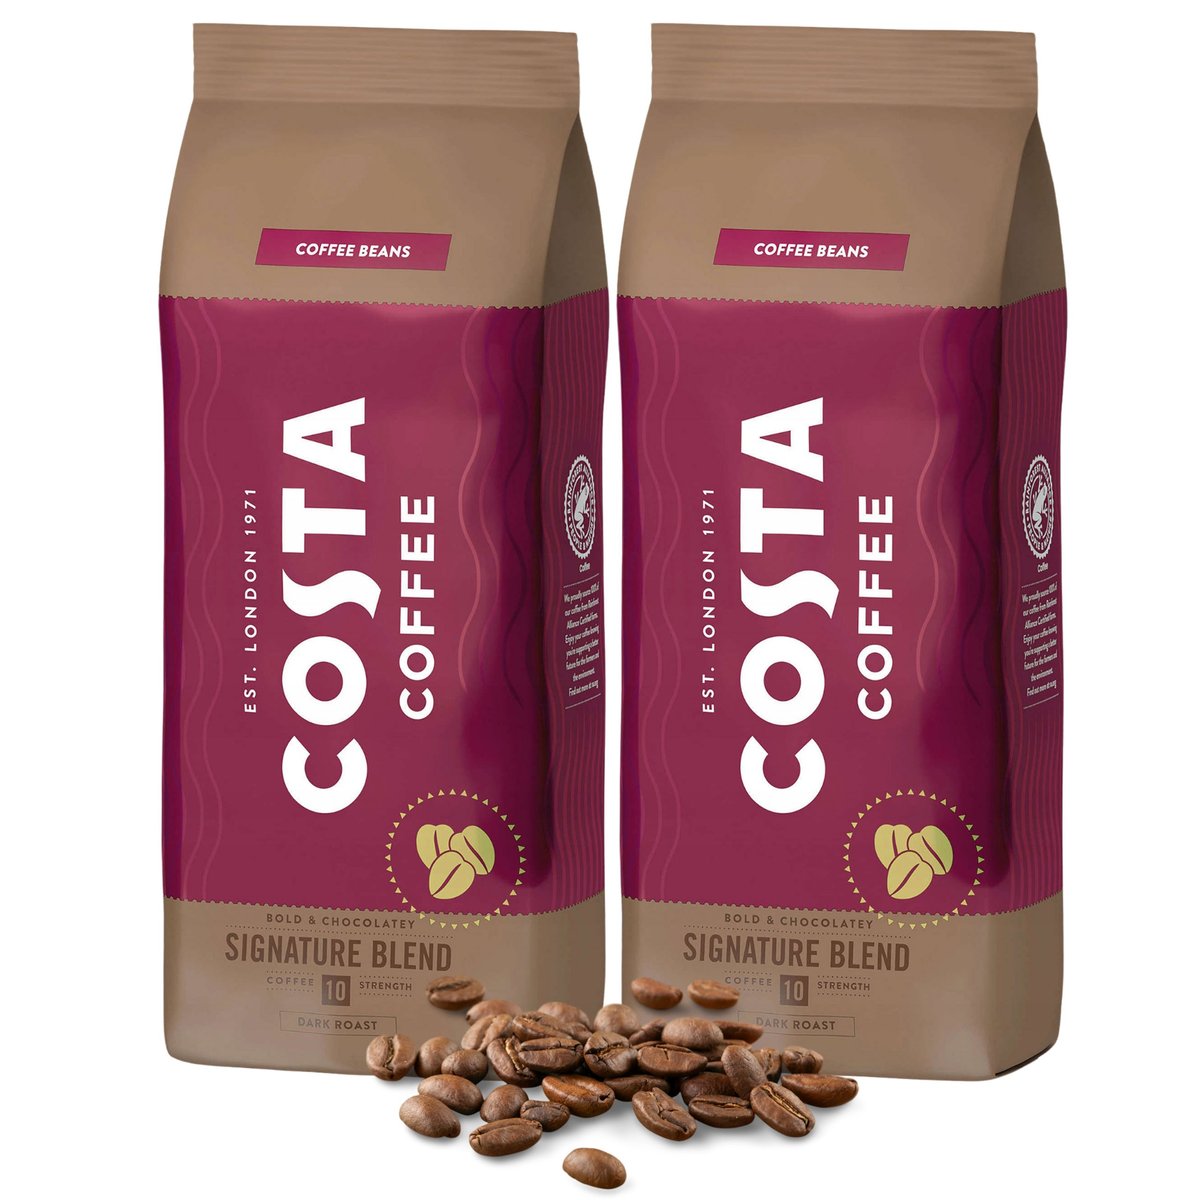 Costa Coffee Kawa Signature Blend Dark Ziarnista, Coffee Beans 2 kg